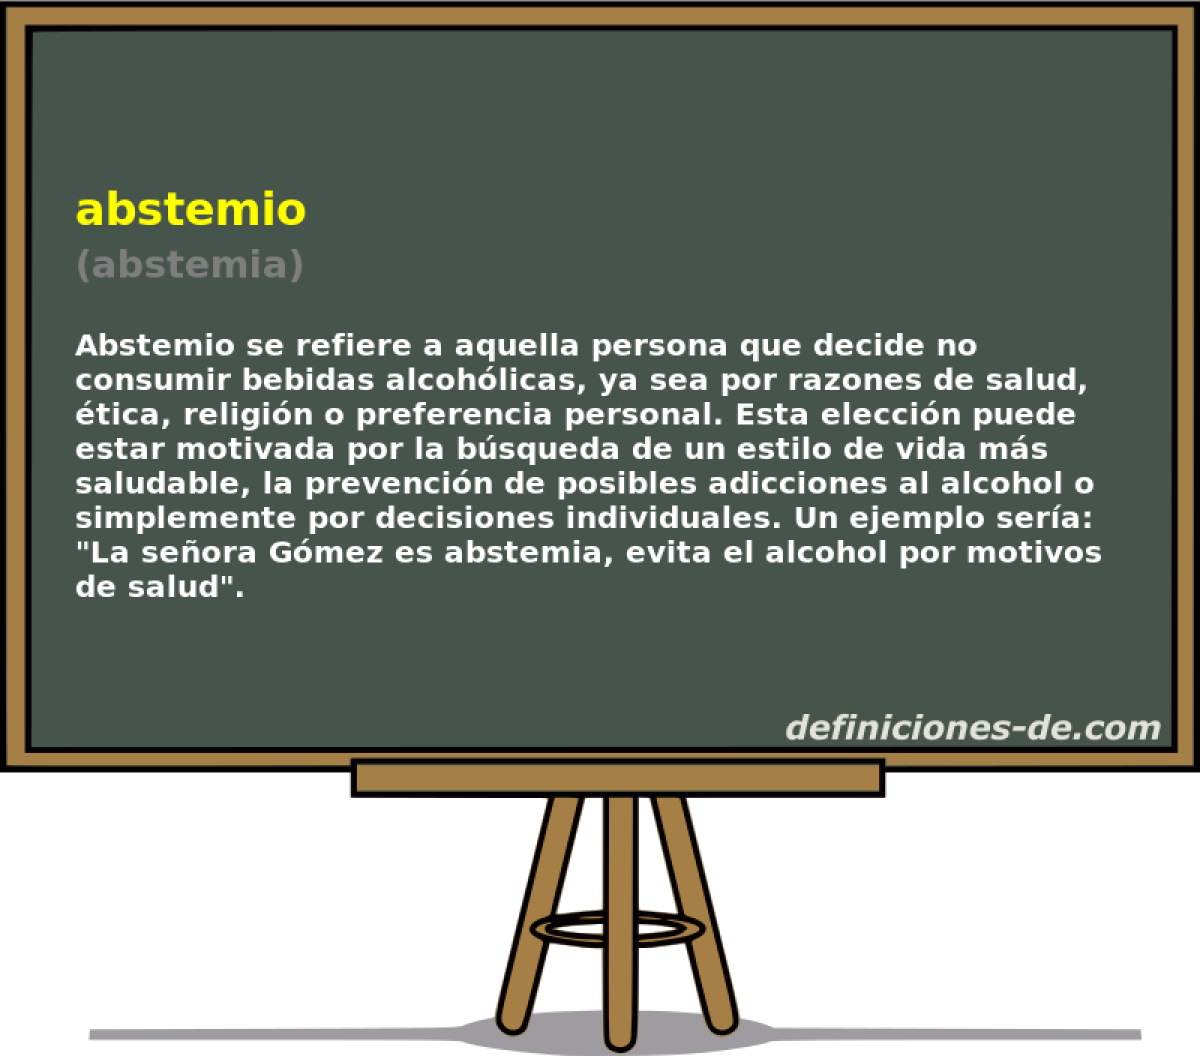 abstemio (abstemia)